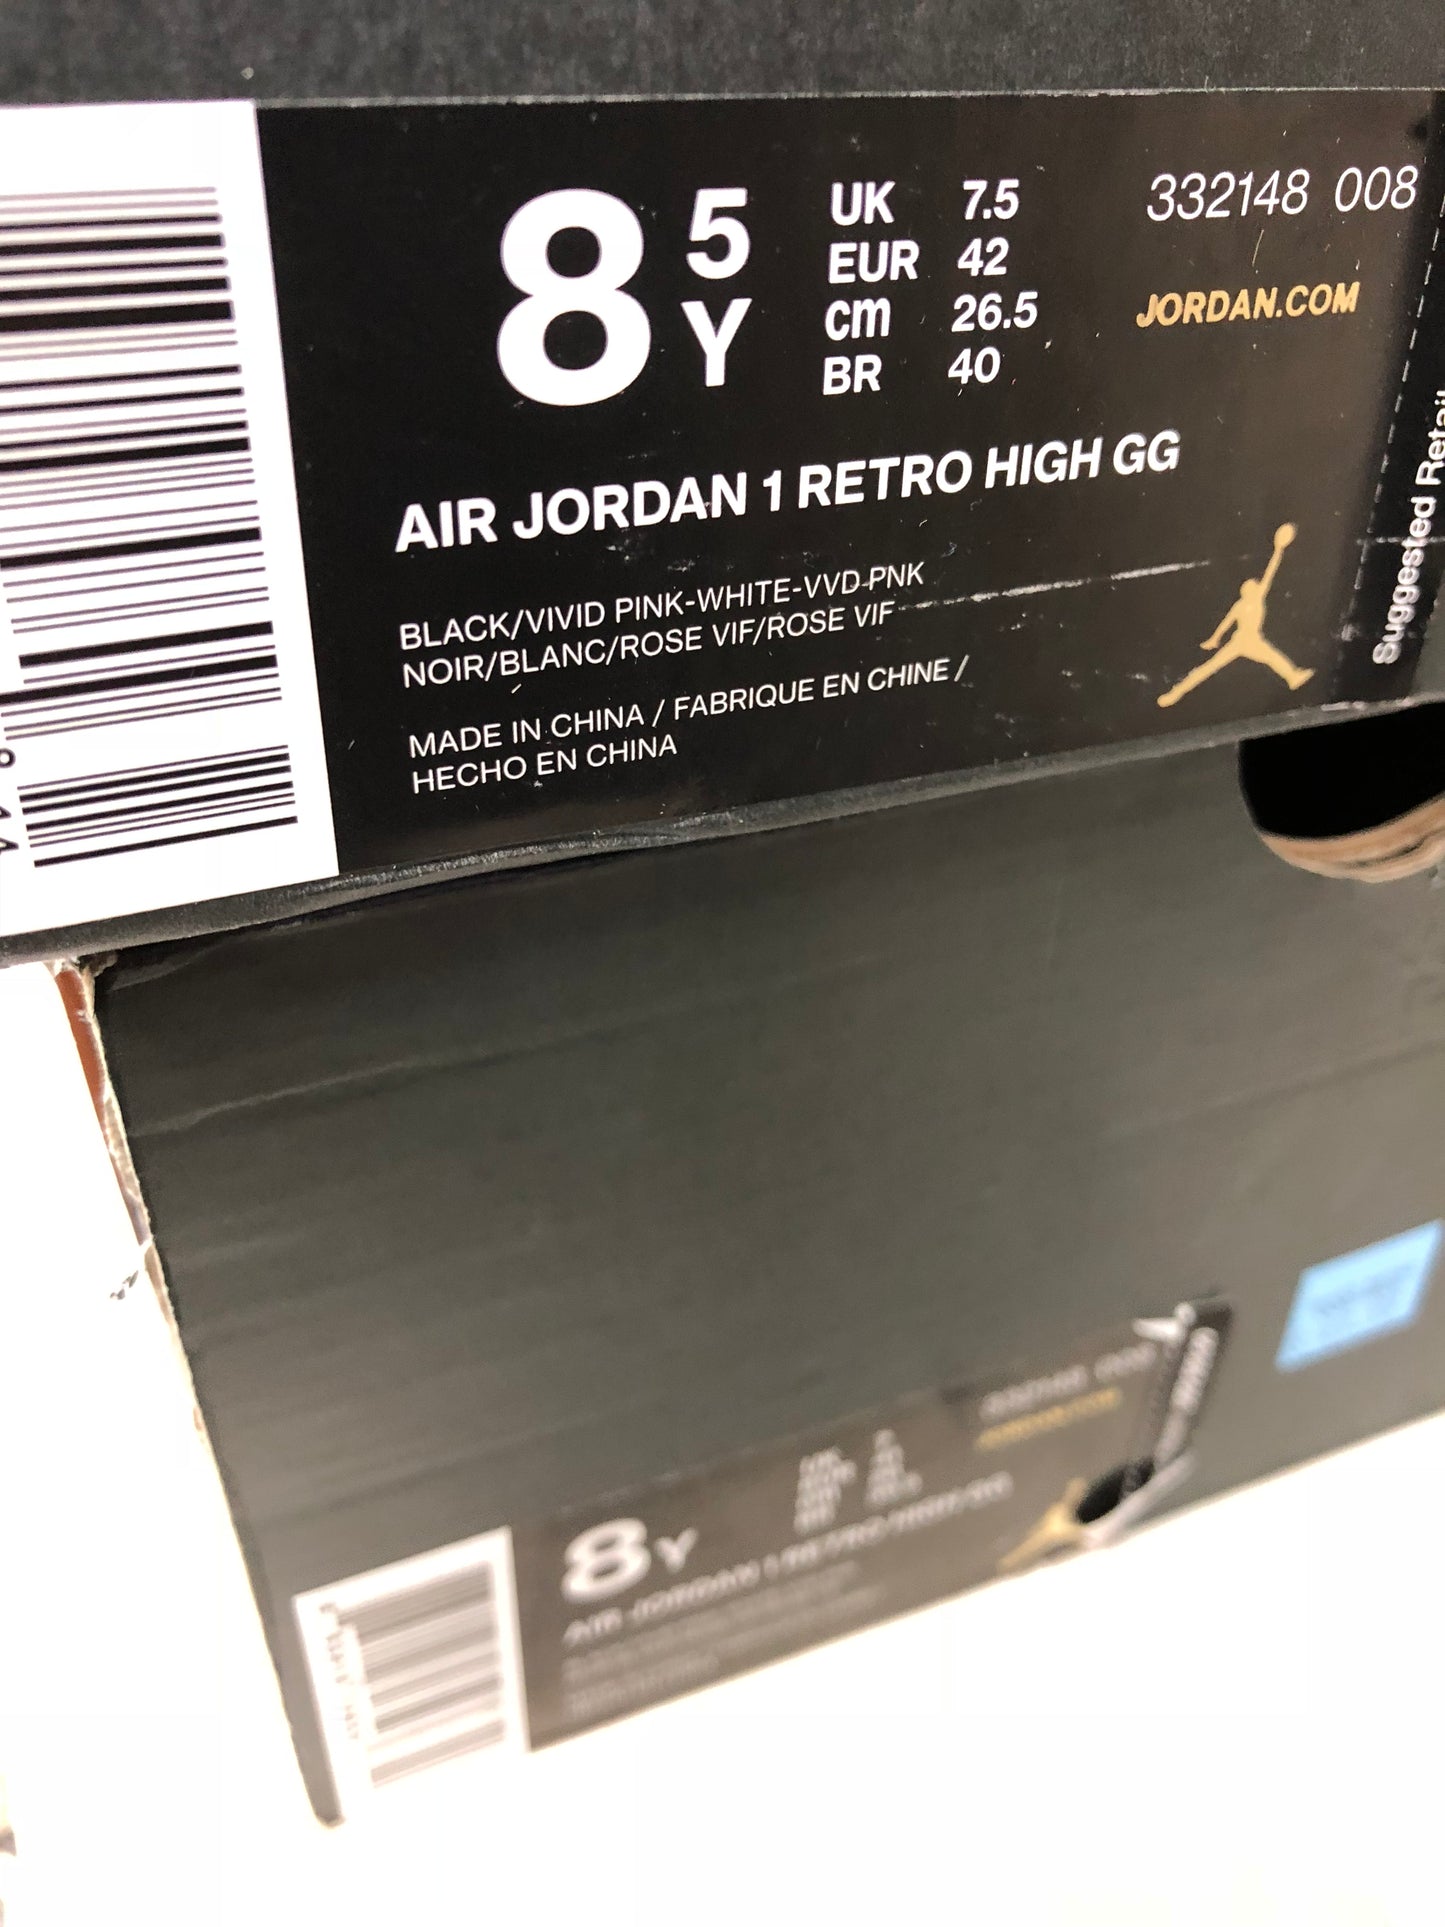 DS Nike Air Jordan 1 Retro High GG Taille 8Y/8.5Y Noir/Vivid Rose 332148 008